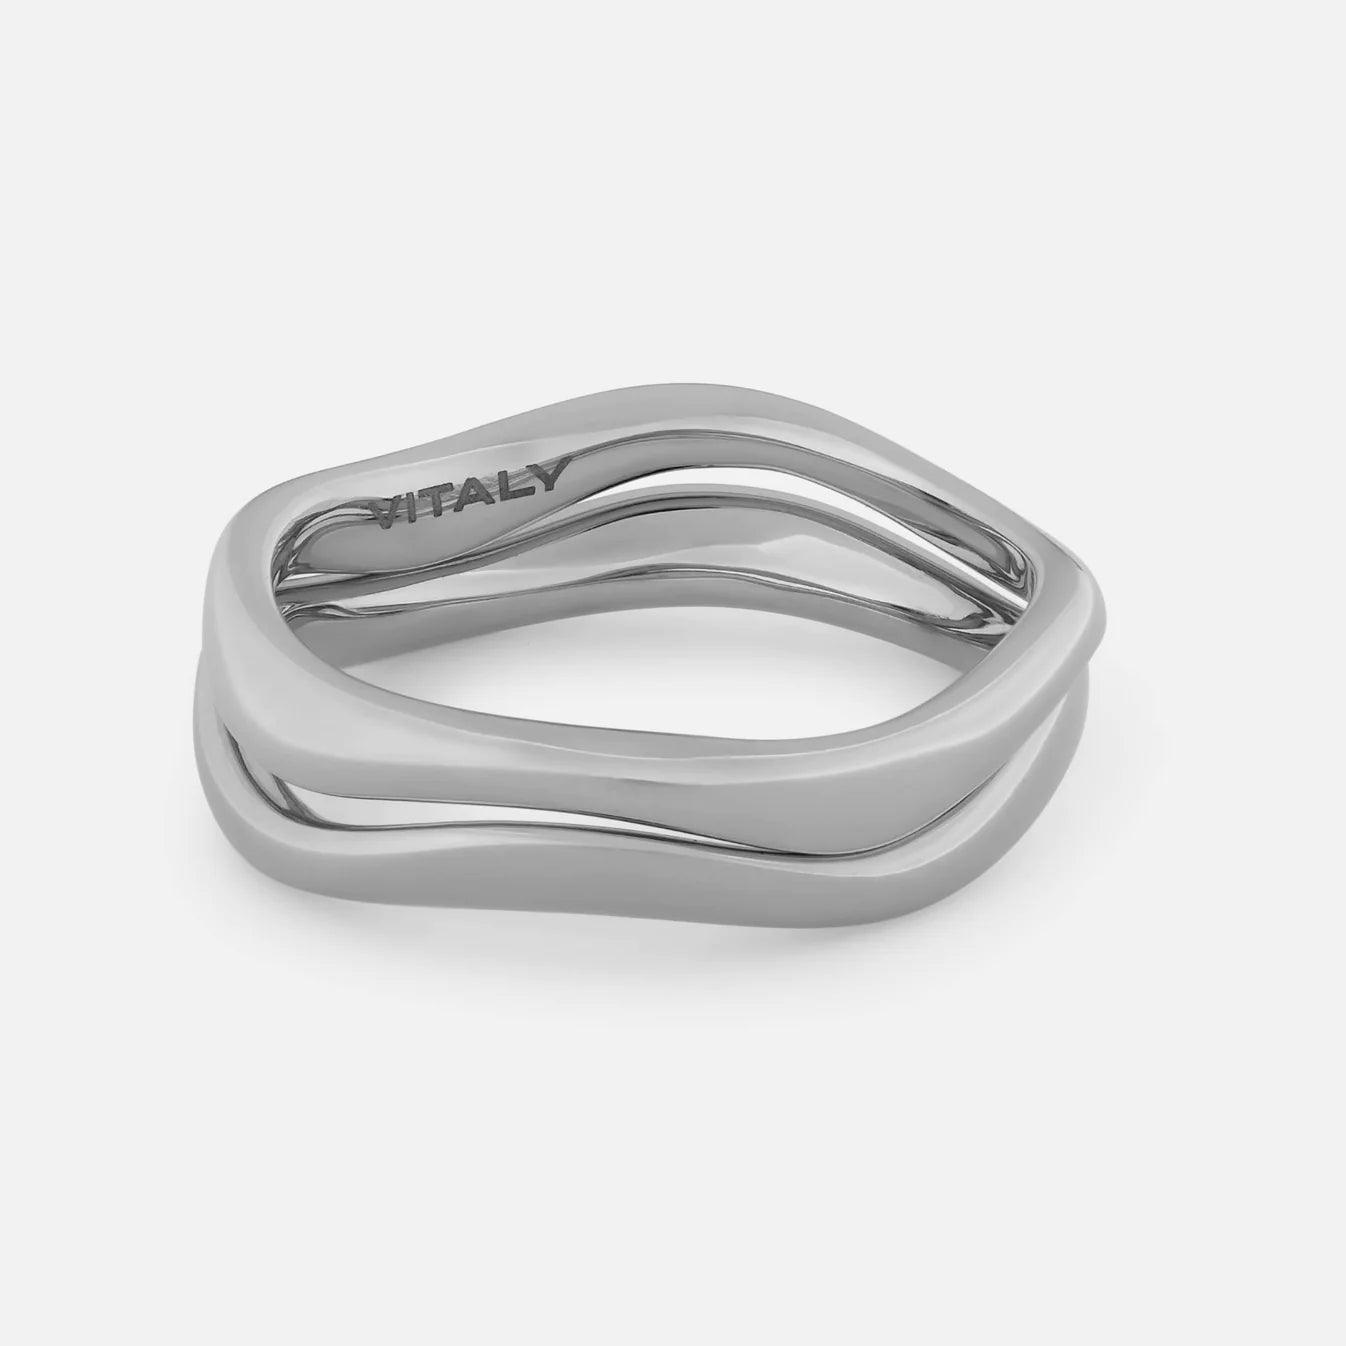 VITALY Slip Stainless Steel Ring - Jewelry